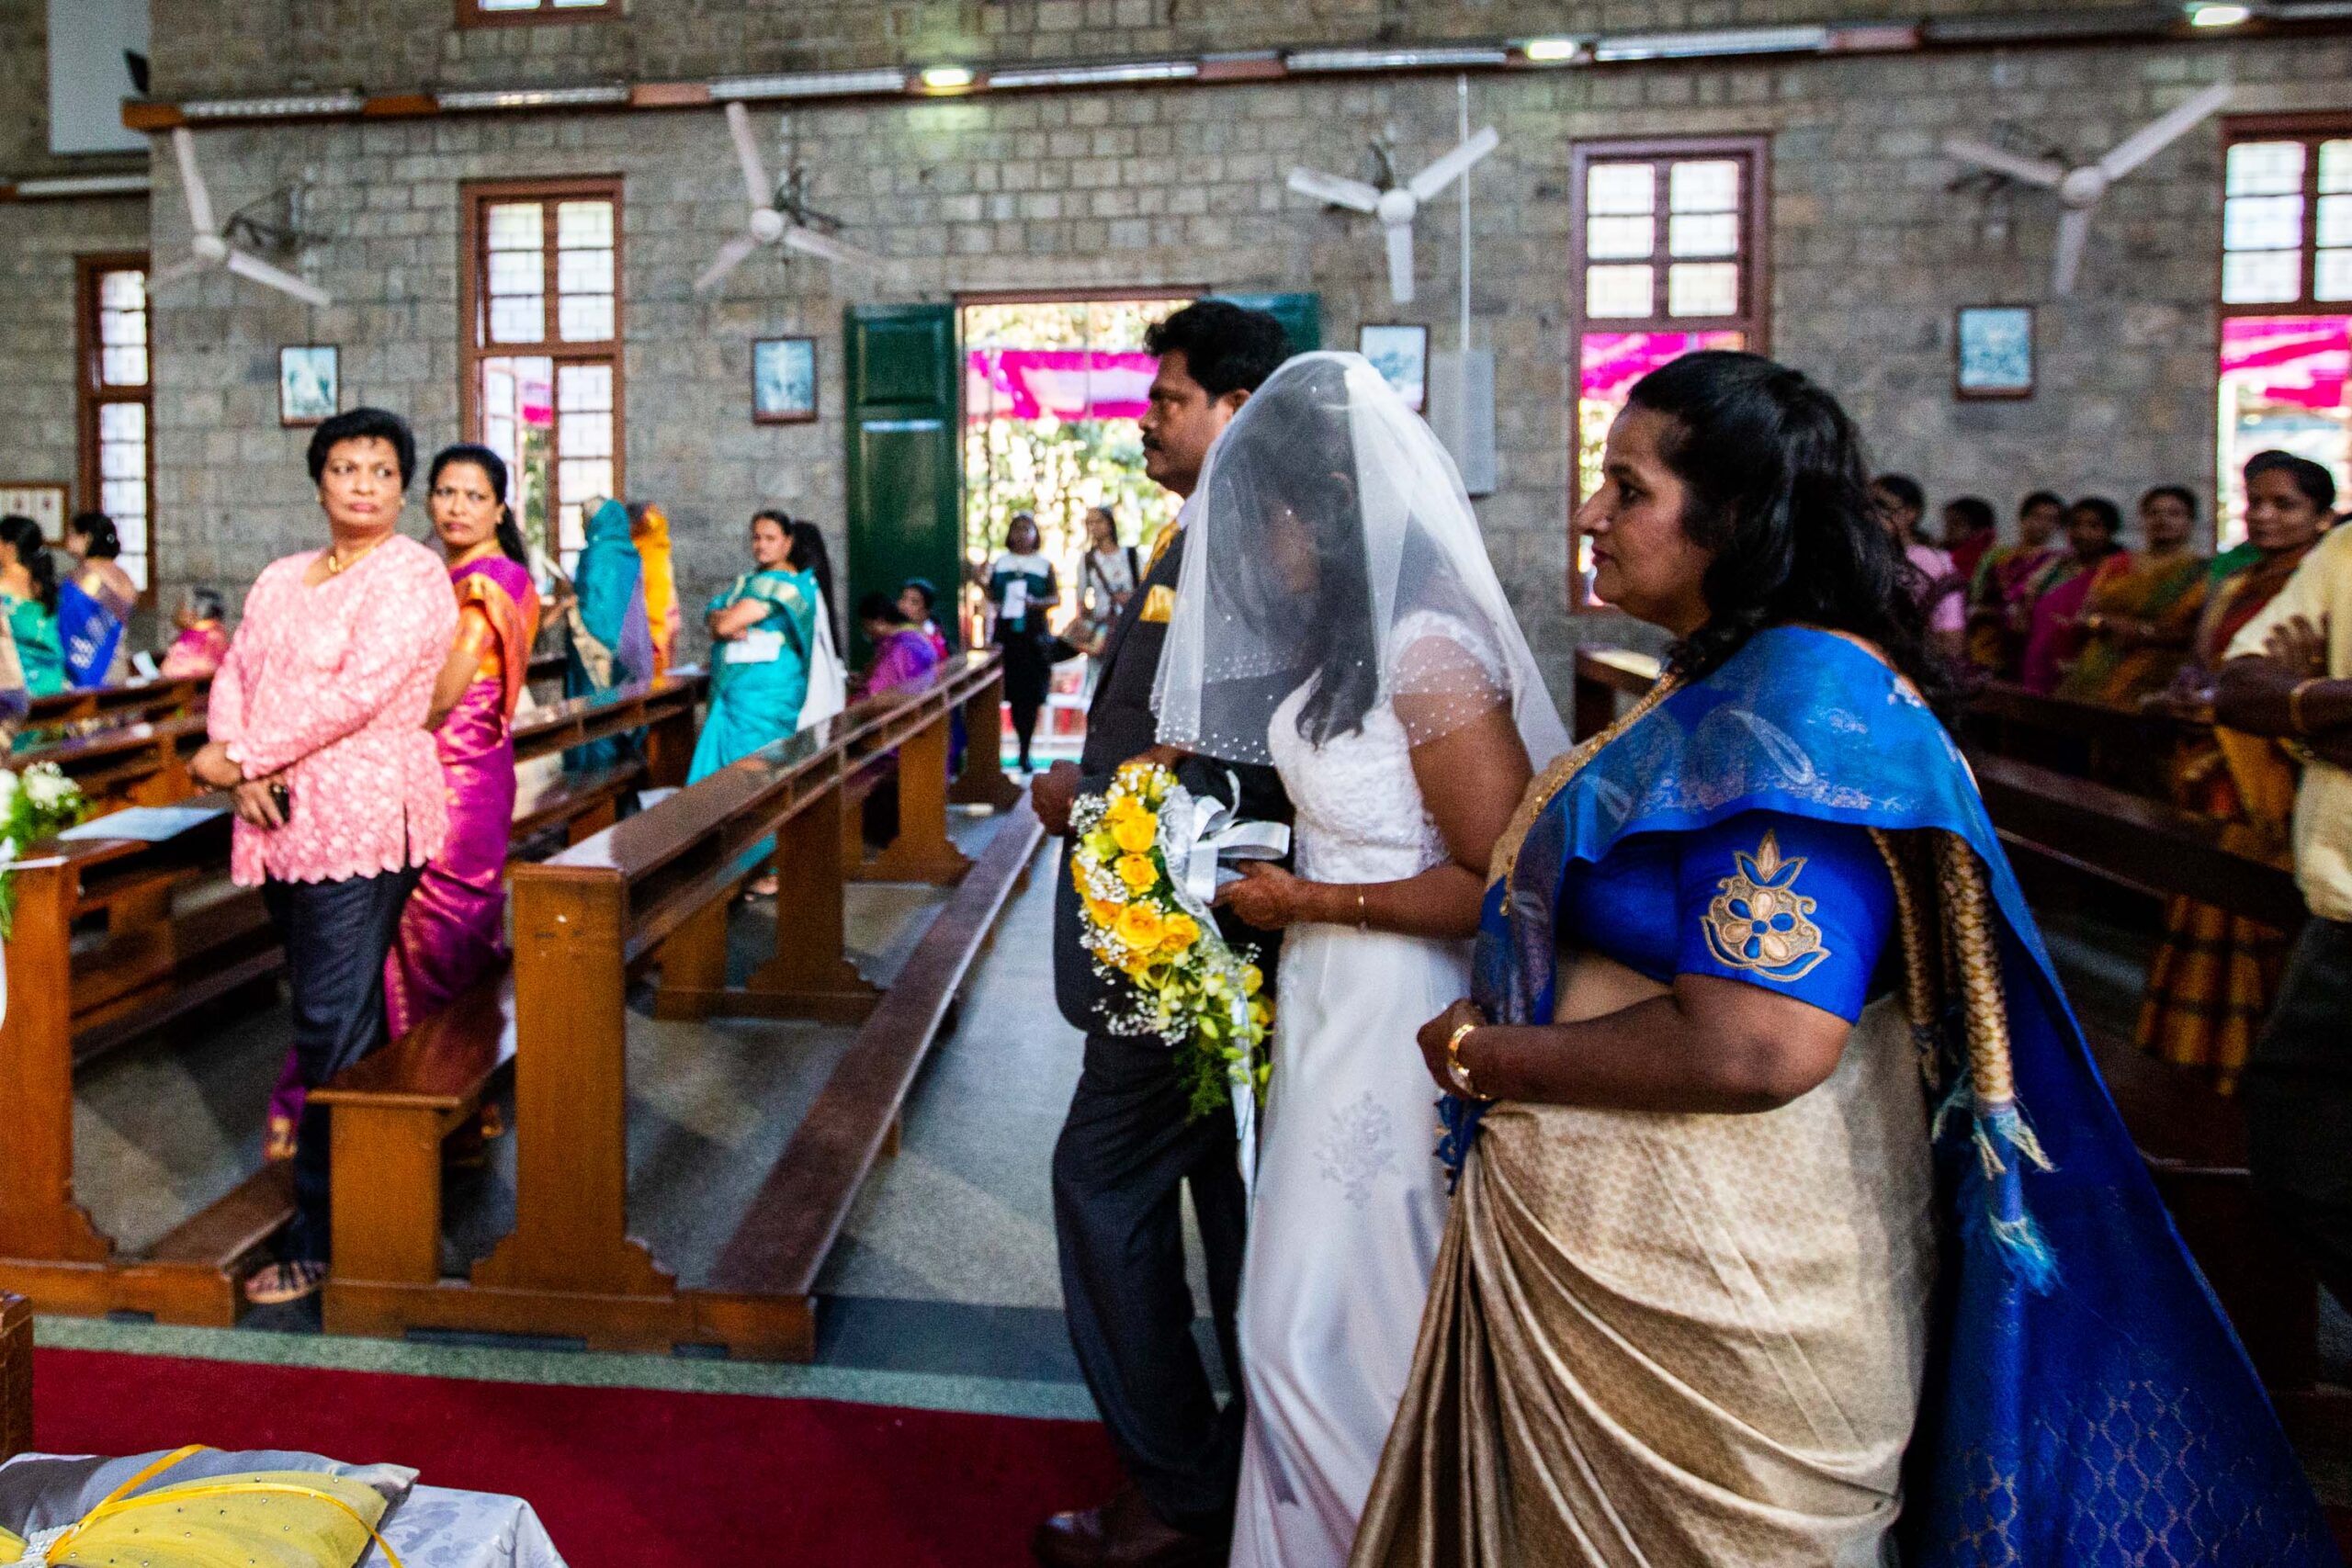 arpitha aaron christian wedding photography in bangalore